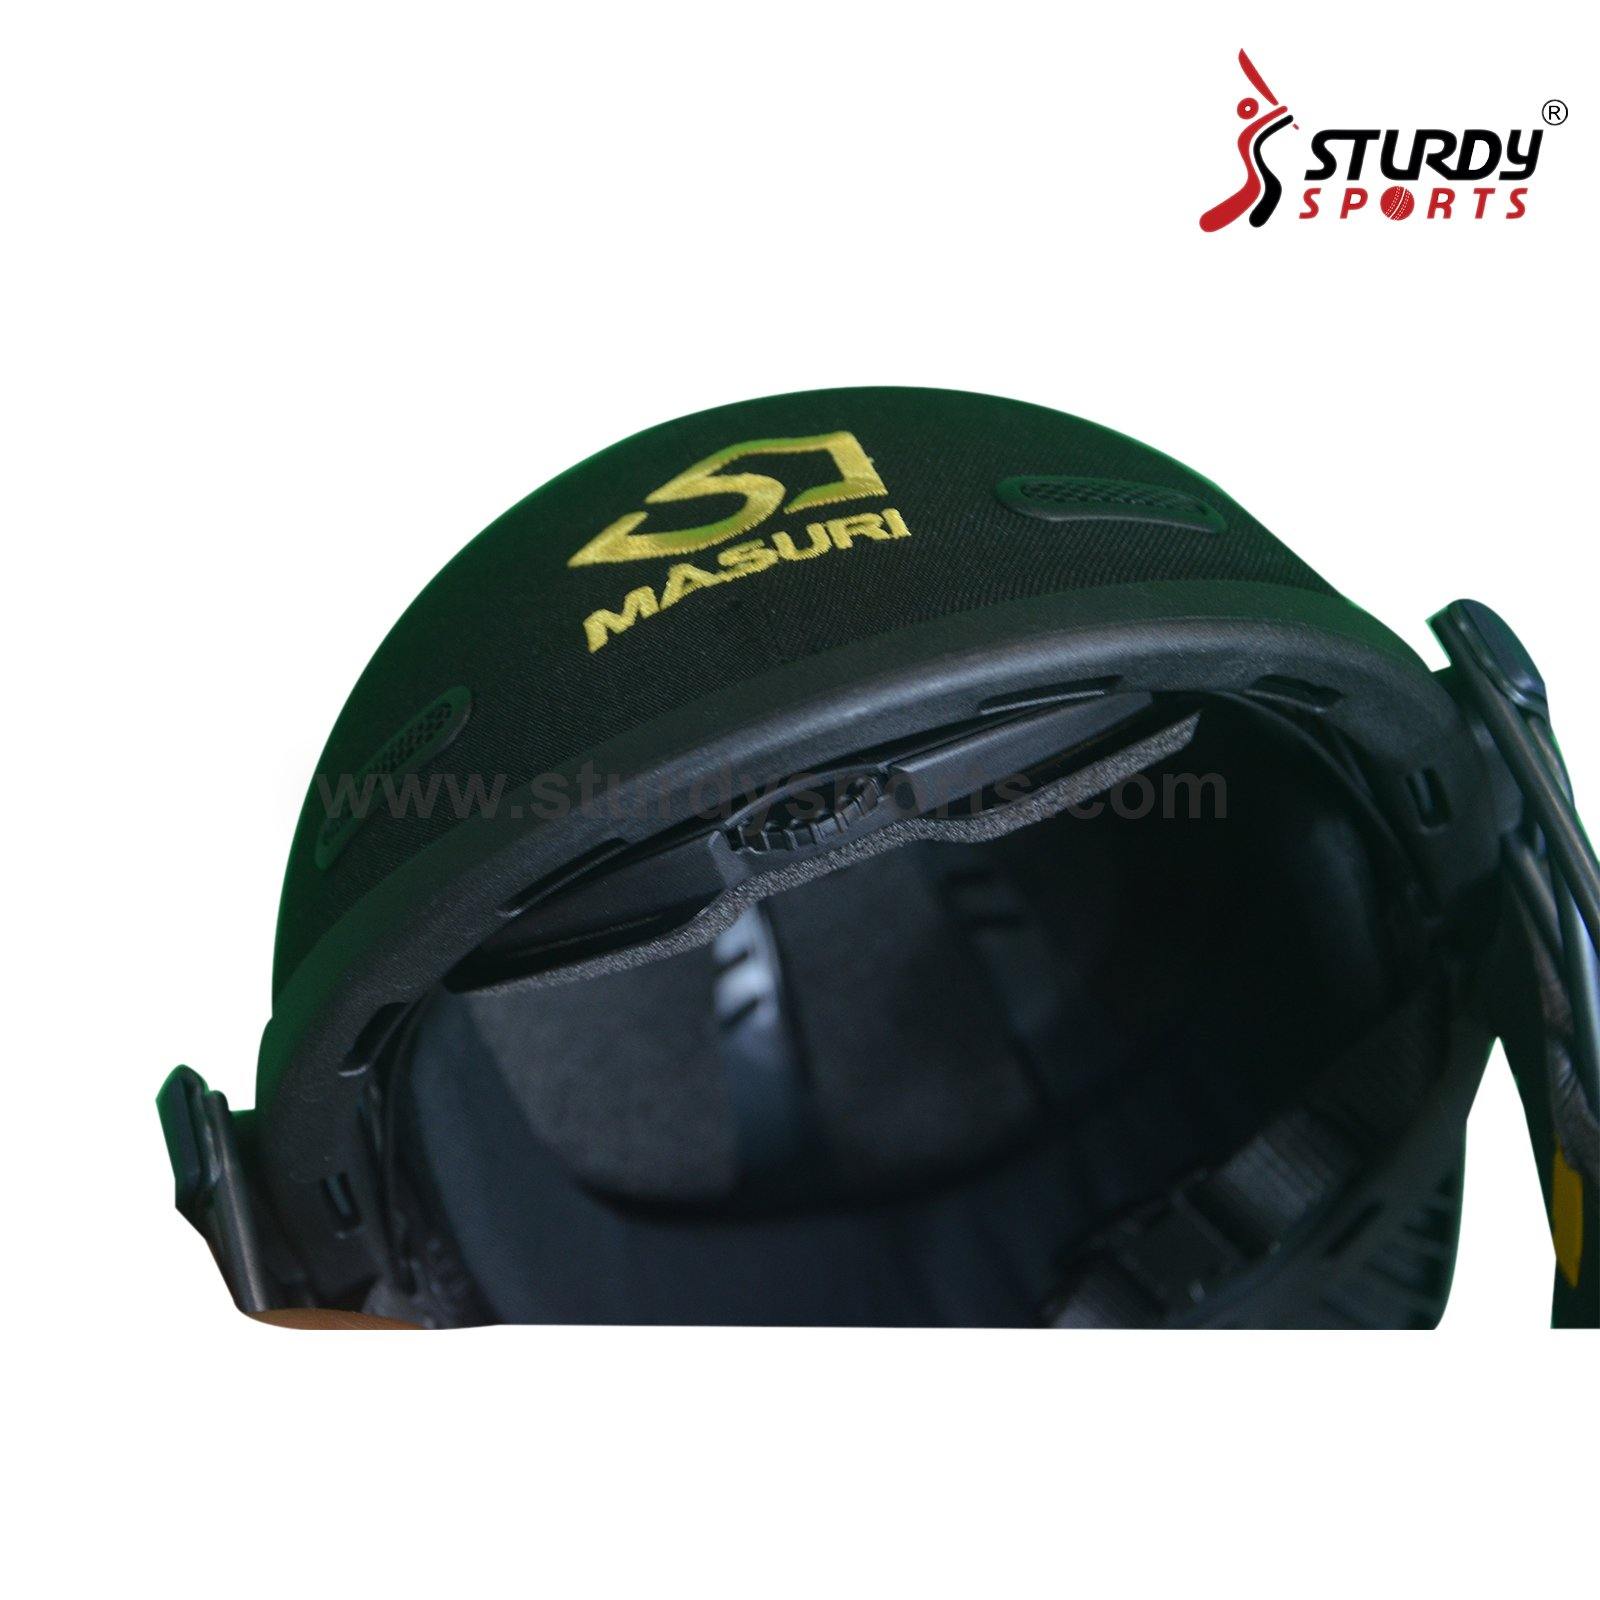 Masuri E Line Titanium Black Cricket Helmet - Senior